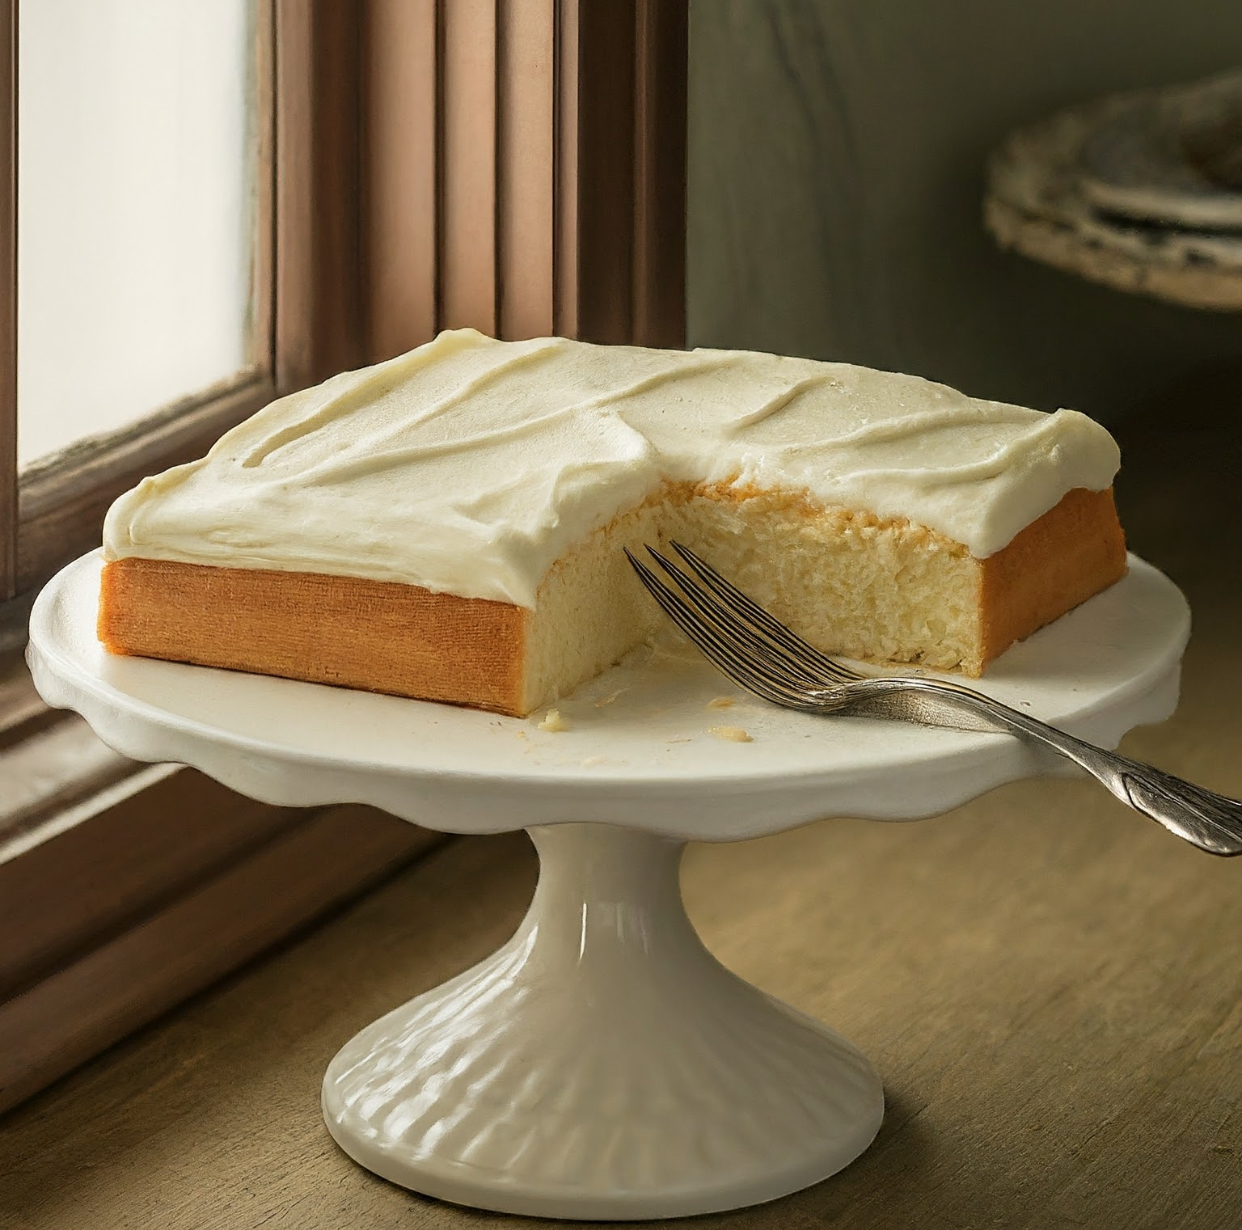 Robert F. West - Food Blog: White Texas Sheet Cake Easy Recipe